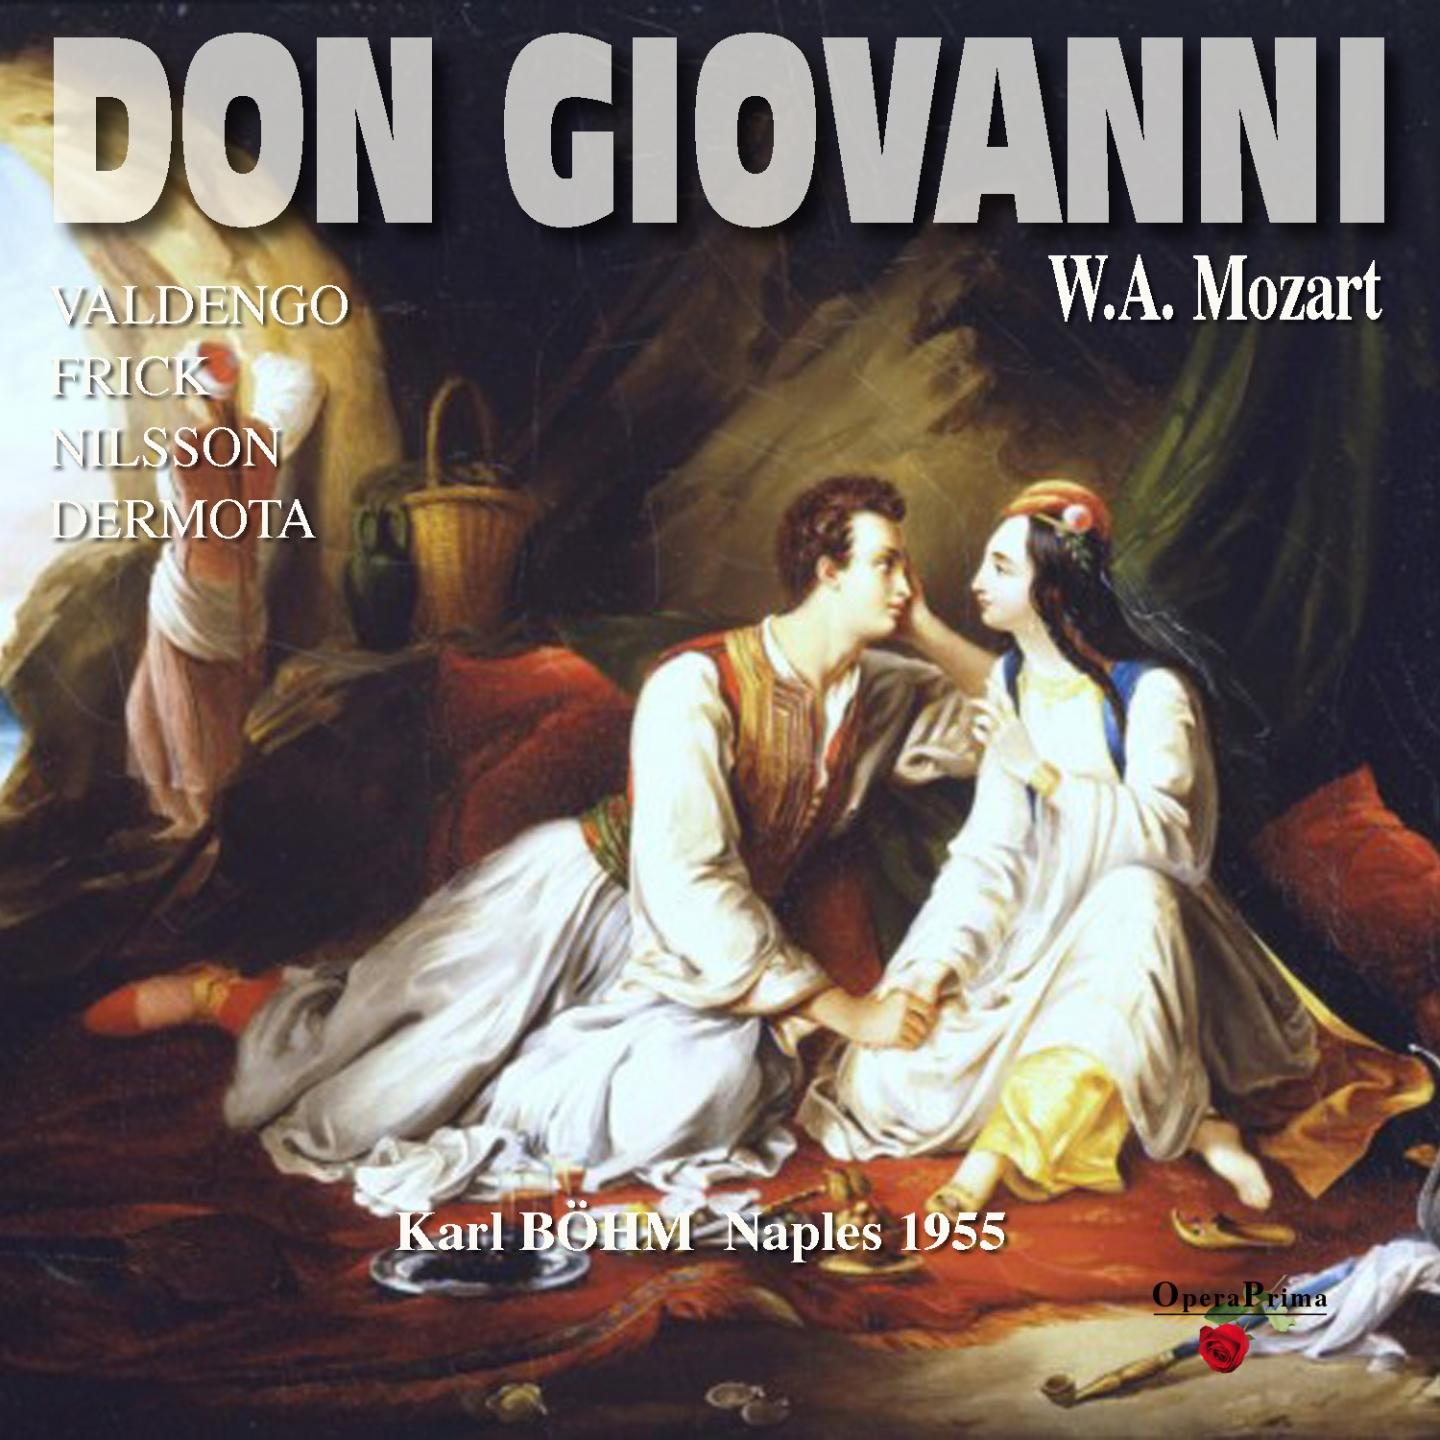 Don Giovanni: Act I  " La ci darem la mano"